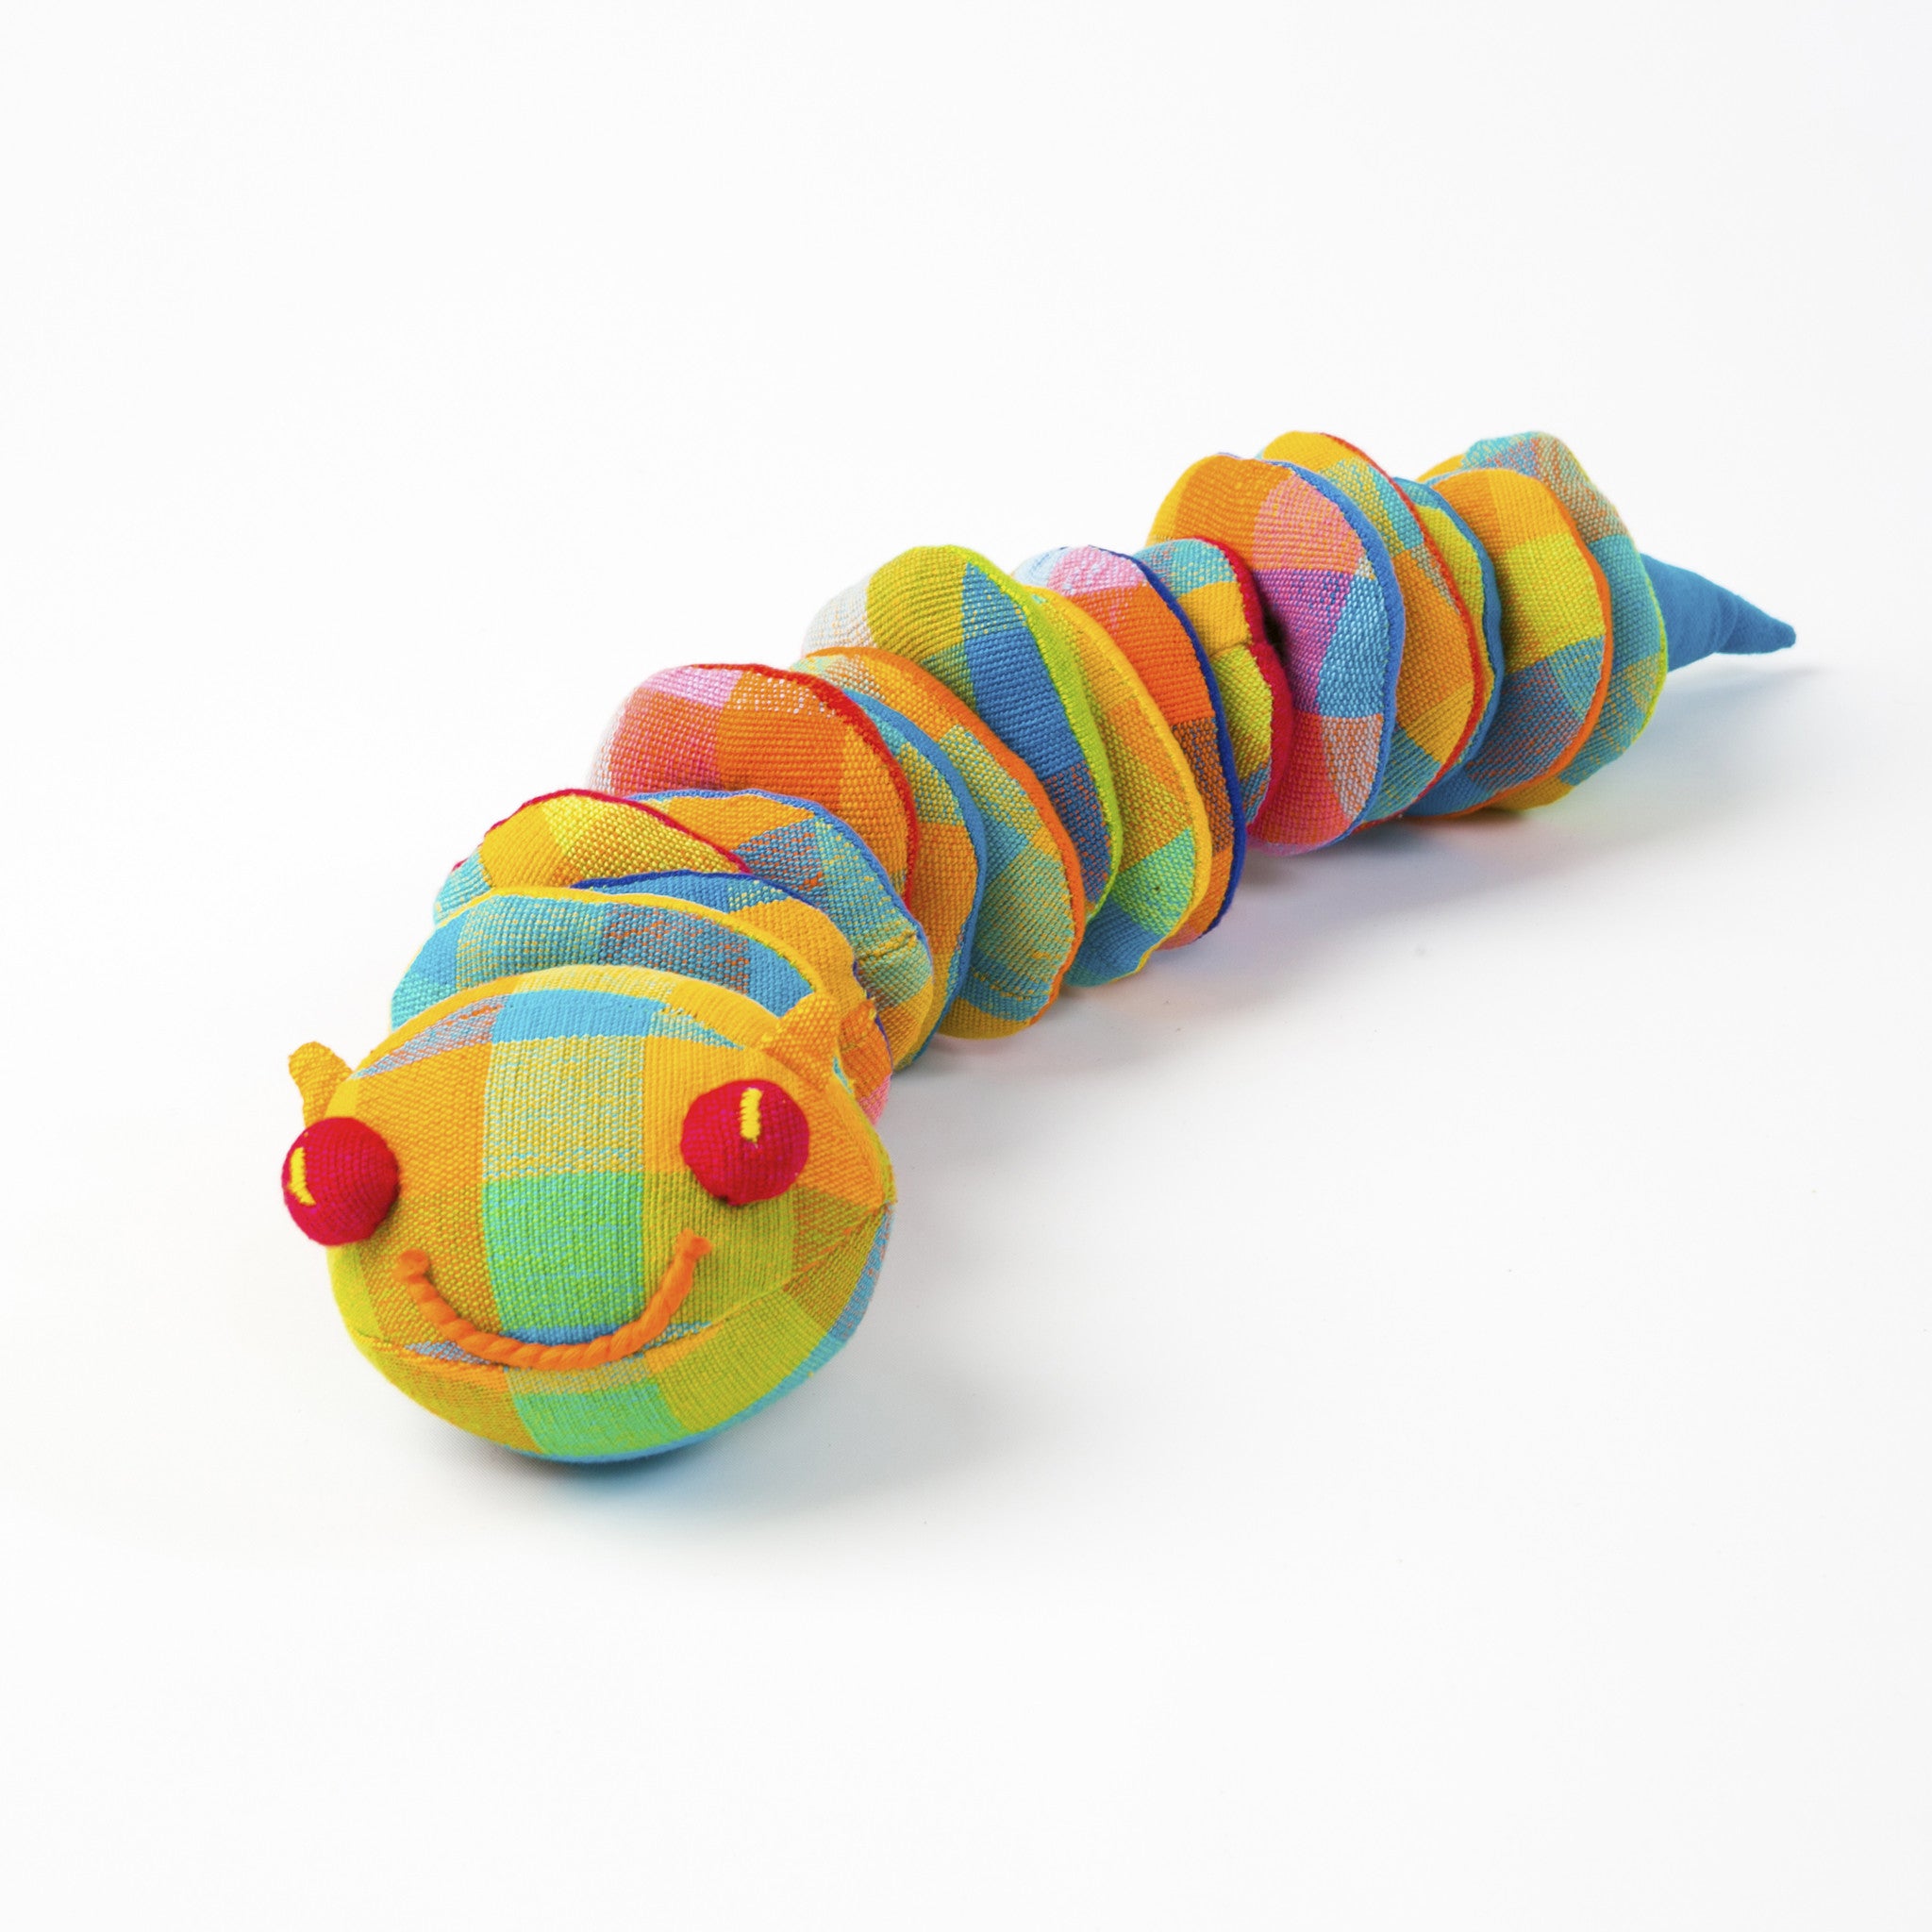 caterpillar-toy-casey-lionheart-imports